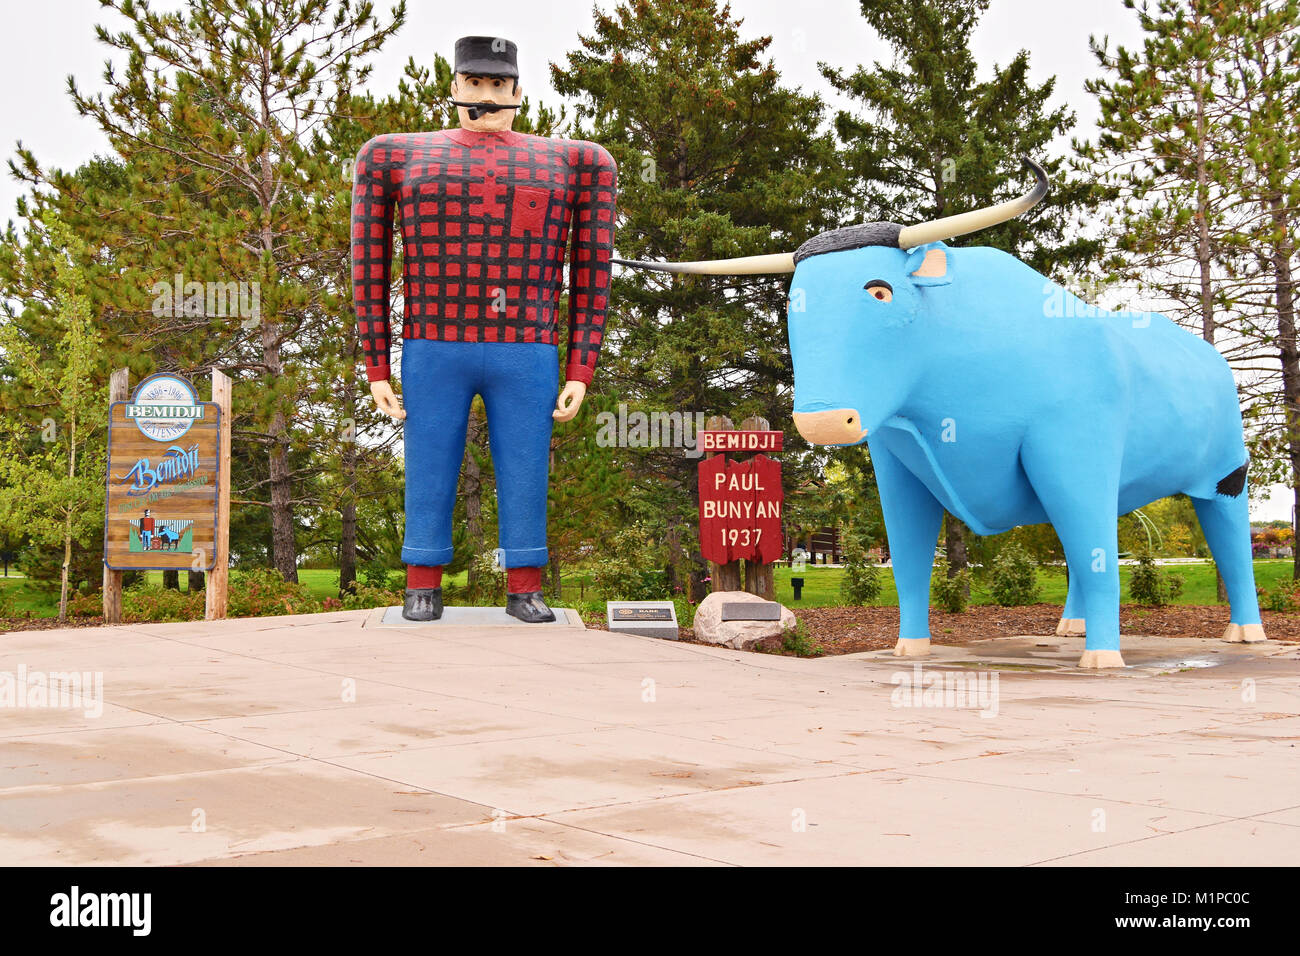 Statue of Paul Bunyan, Legendary Lumberjack and Babe The Blue Ox in Bemidji, MN. United States Stock Photo